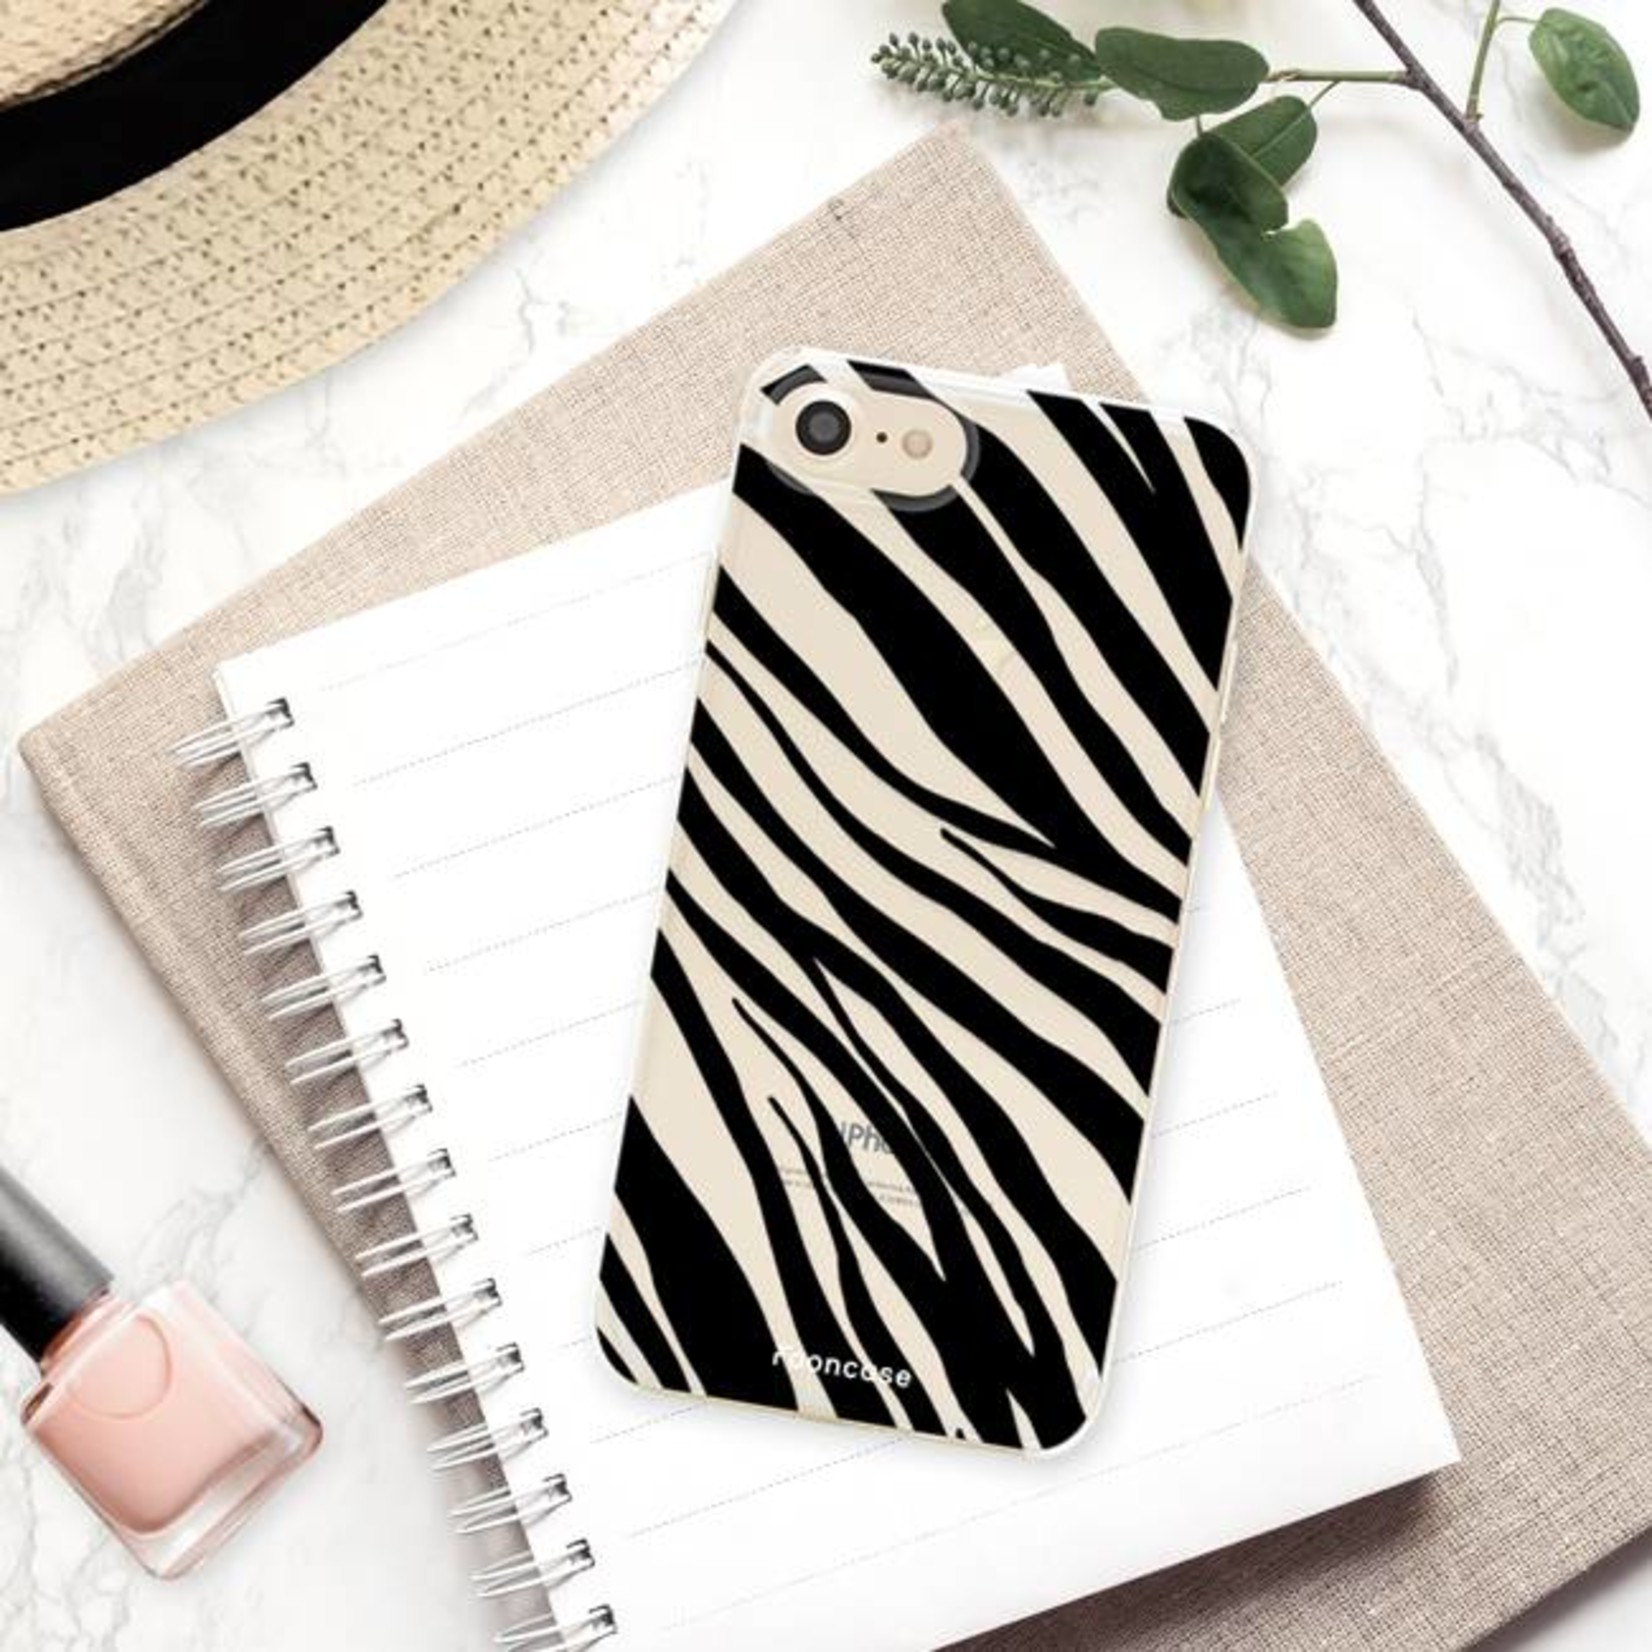 FOONCASE iPhone 7 hoesje TPU Soft Case - Back Cover - Zebra print